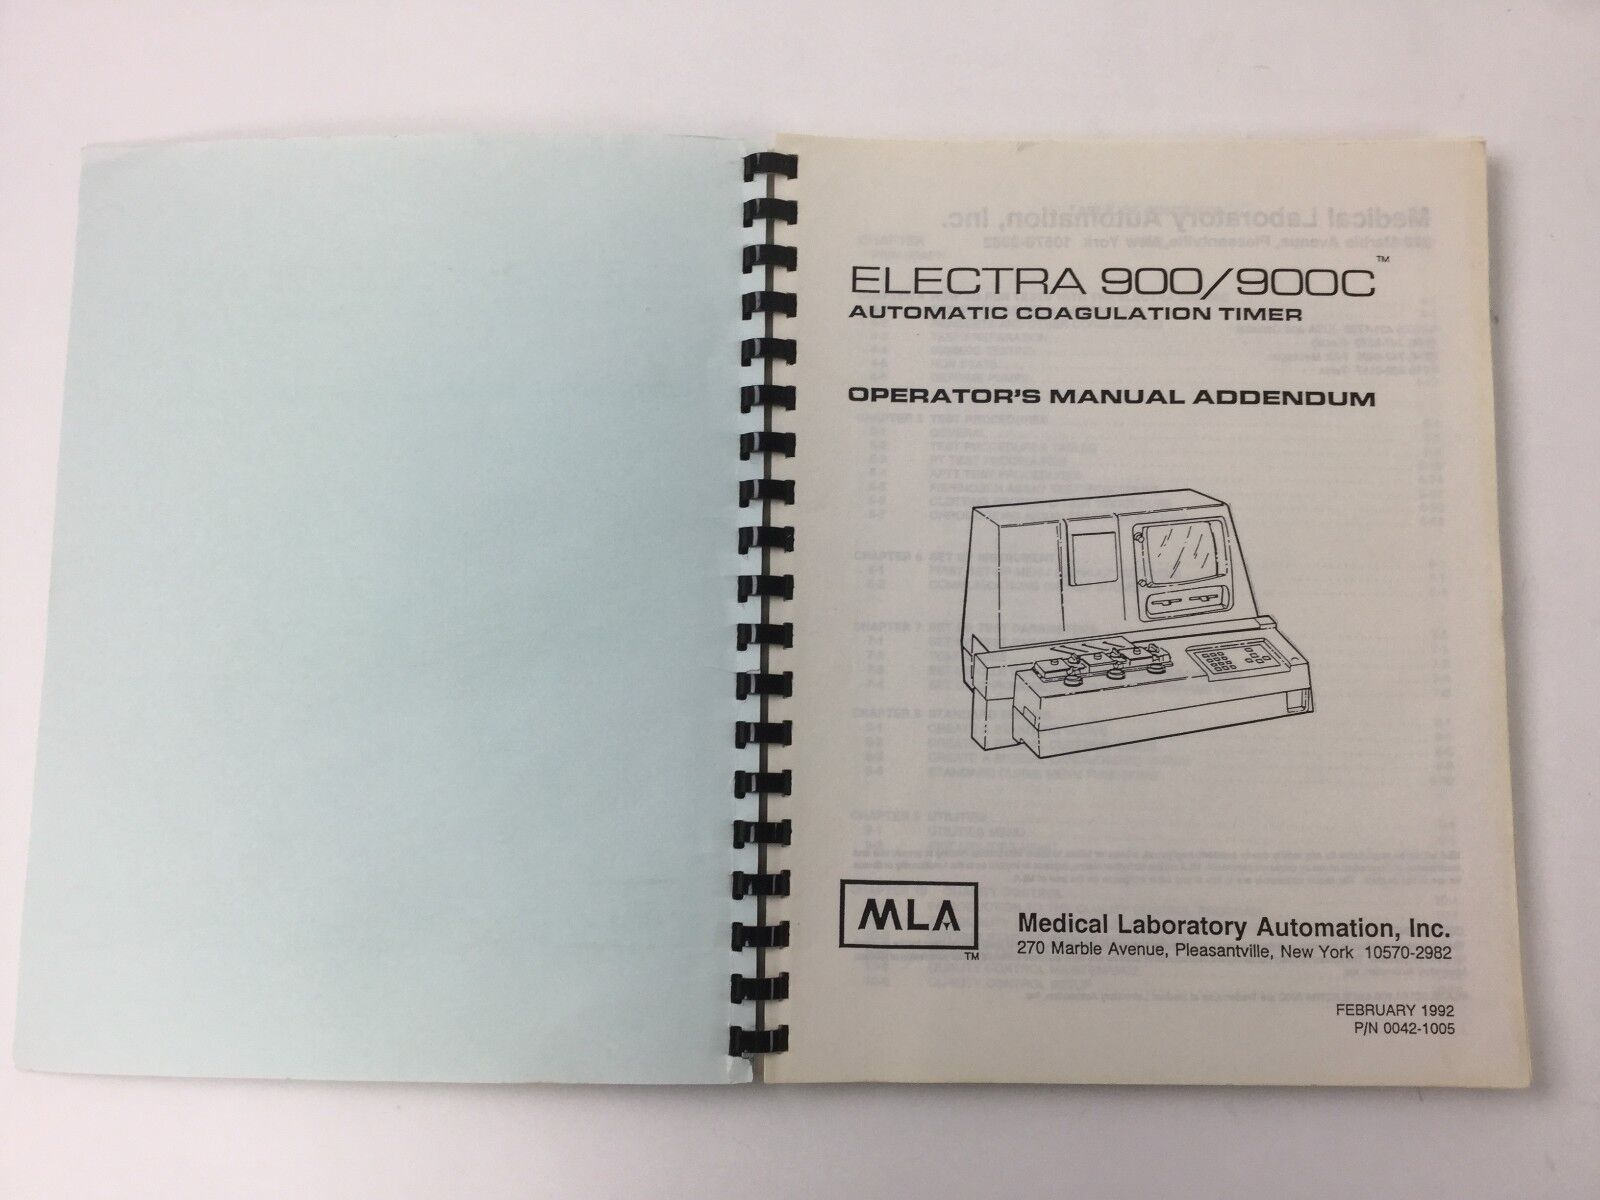 Medical Laboratory Operators Manual ADDENDUM for Electra 900 and 900C